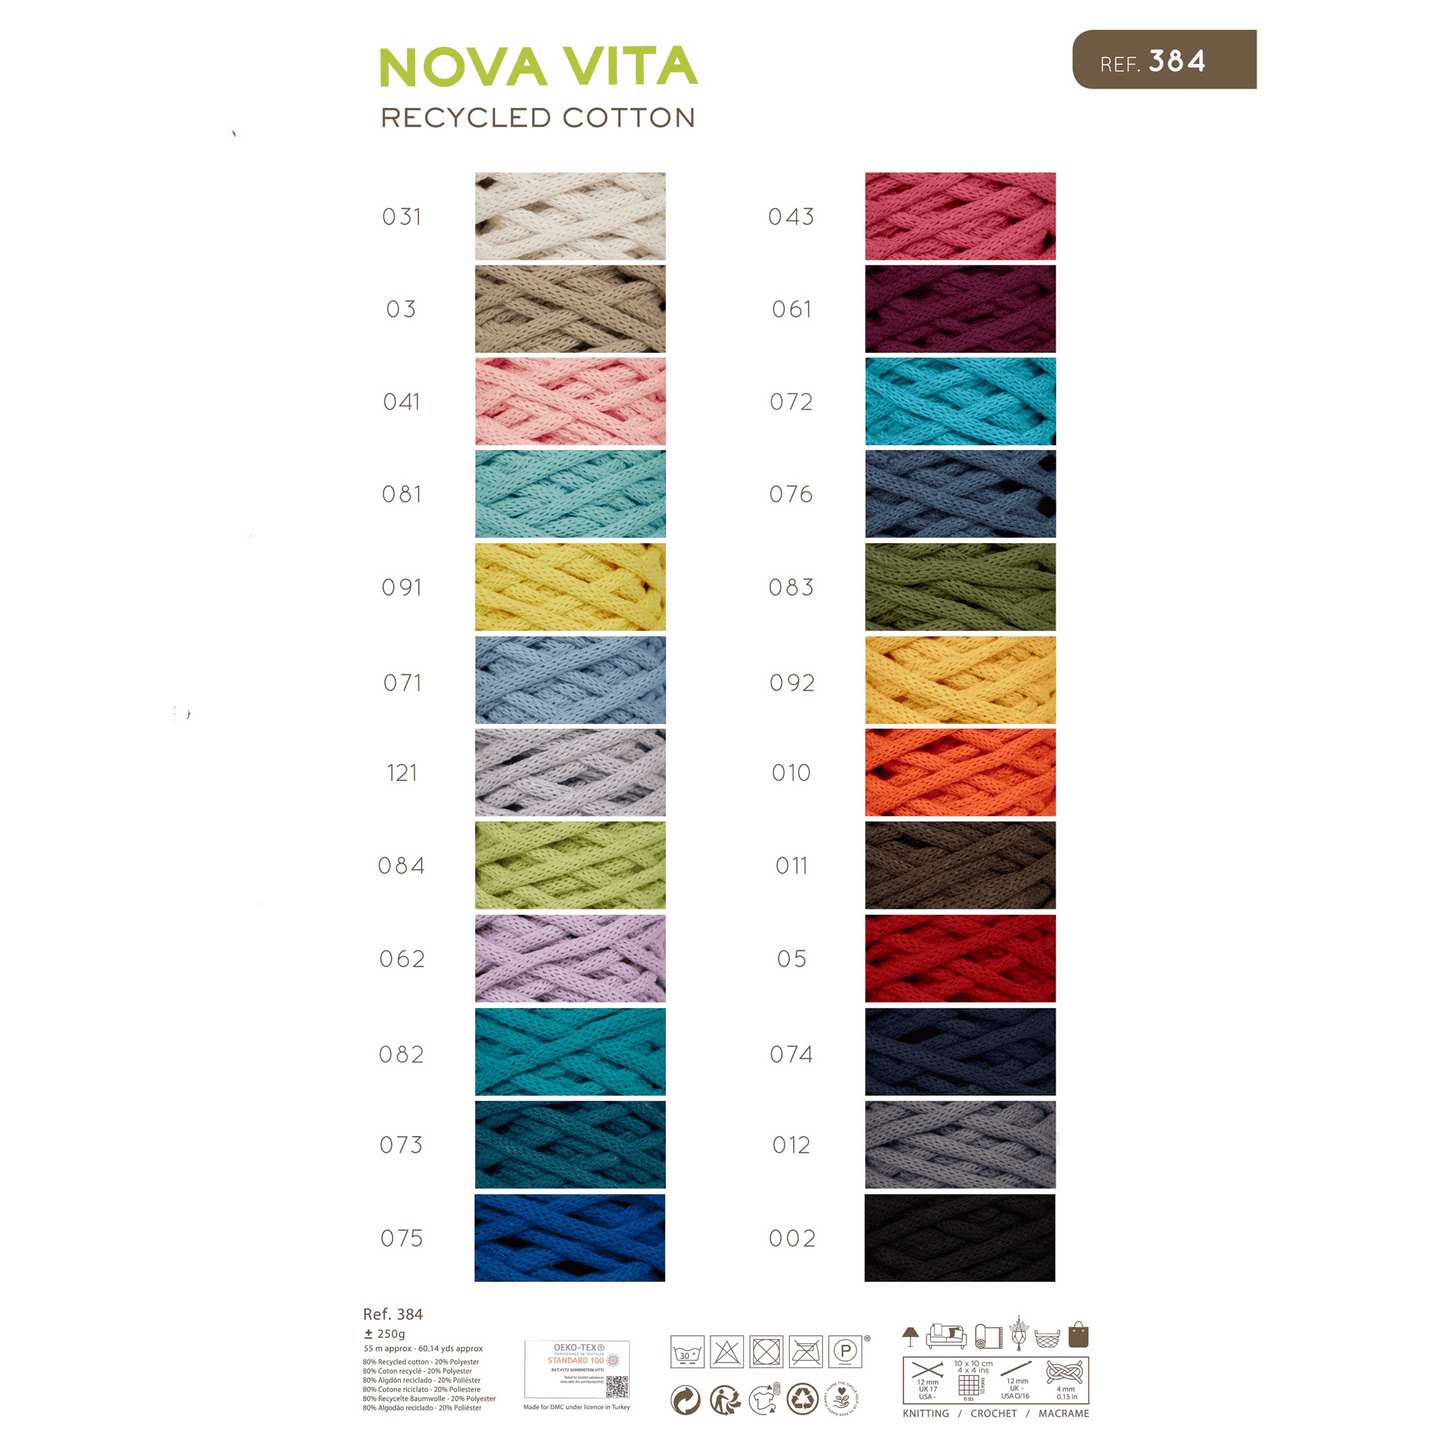 DMC Nova Vita recycled cotton, royal, 95000, Farbe 75